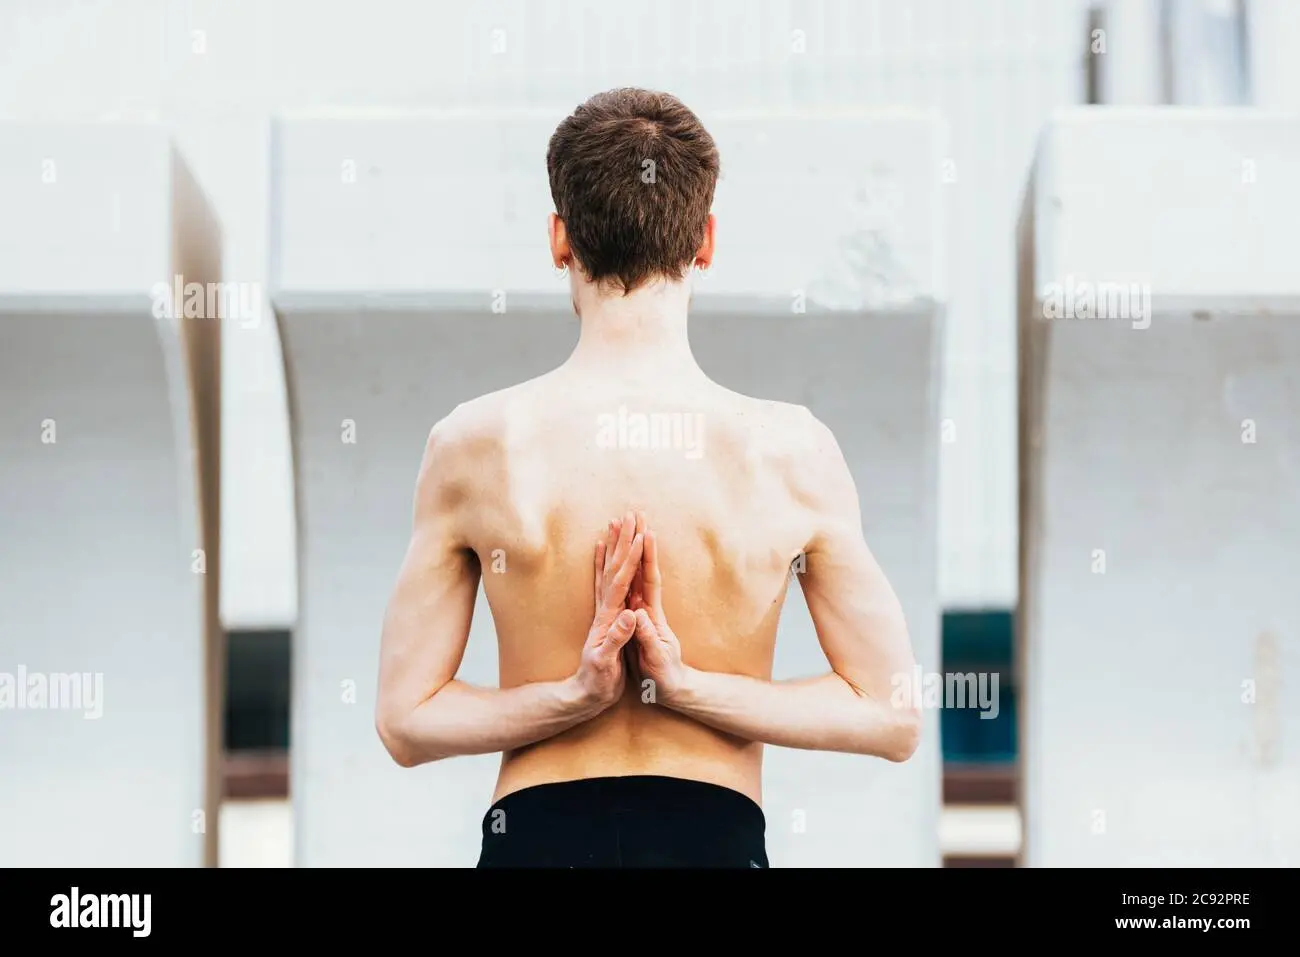 rezo invertido yoga - Qué parte del cuerpo se trabaja con rezo invertido